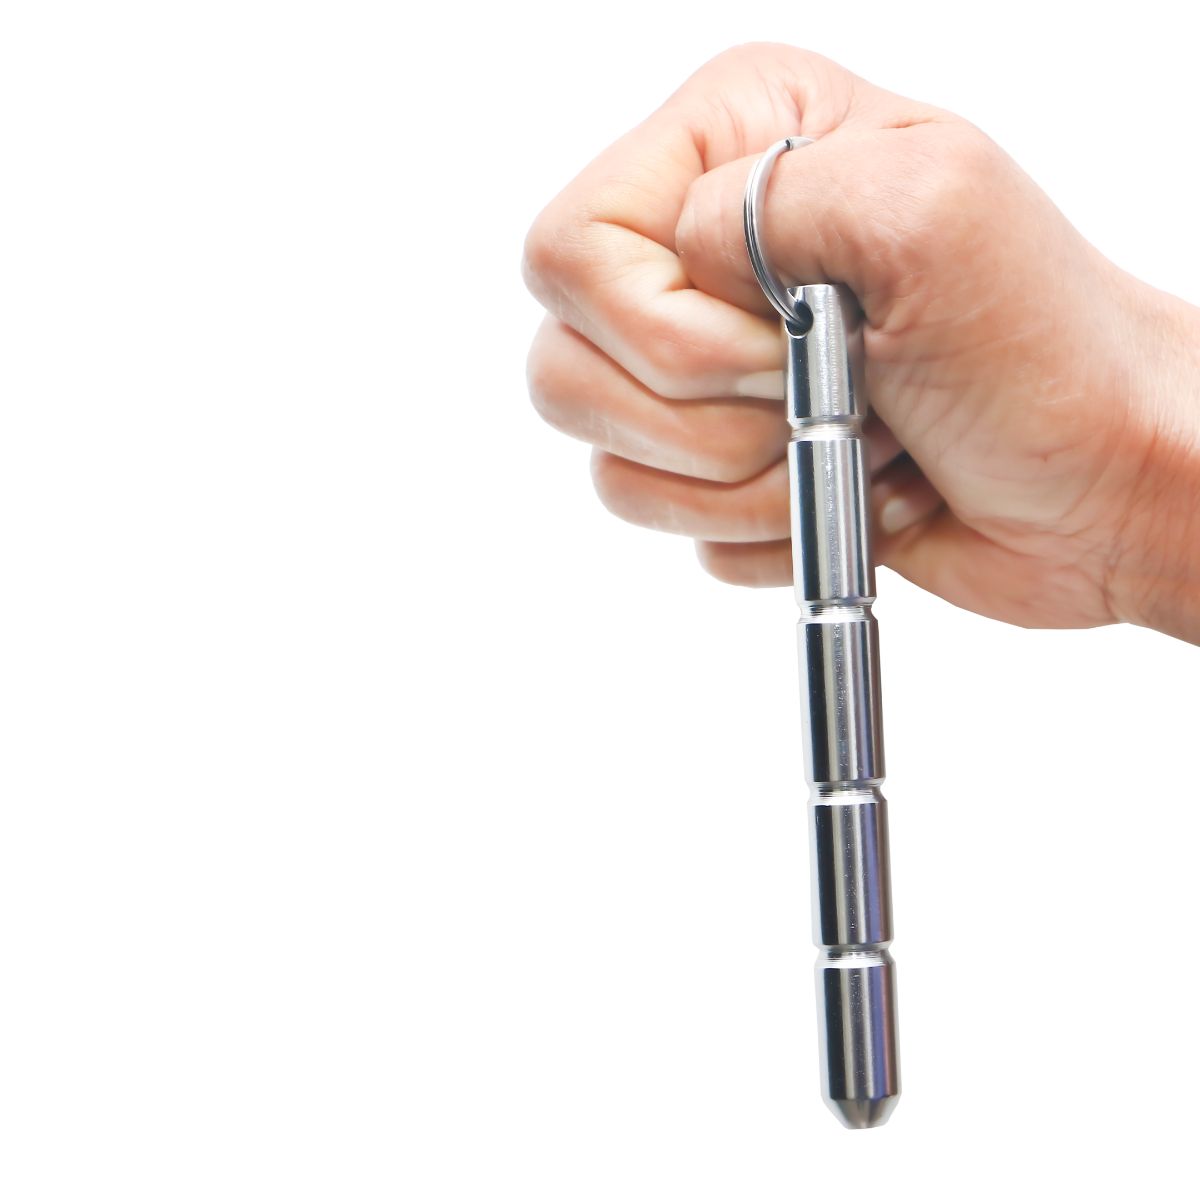 Kubotan Self Defense Keychain Tool - Flat Tipped - Type A 3